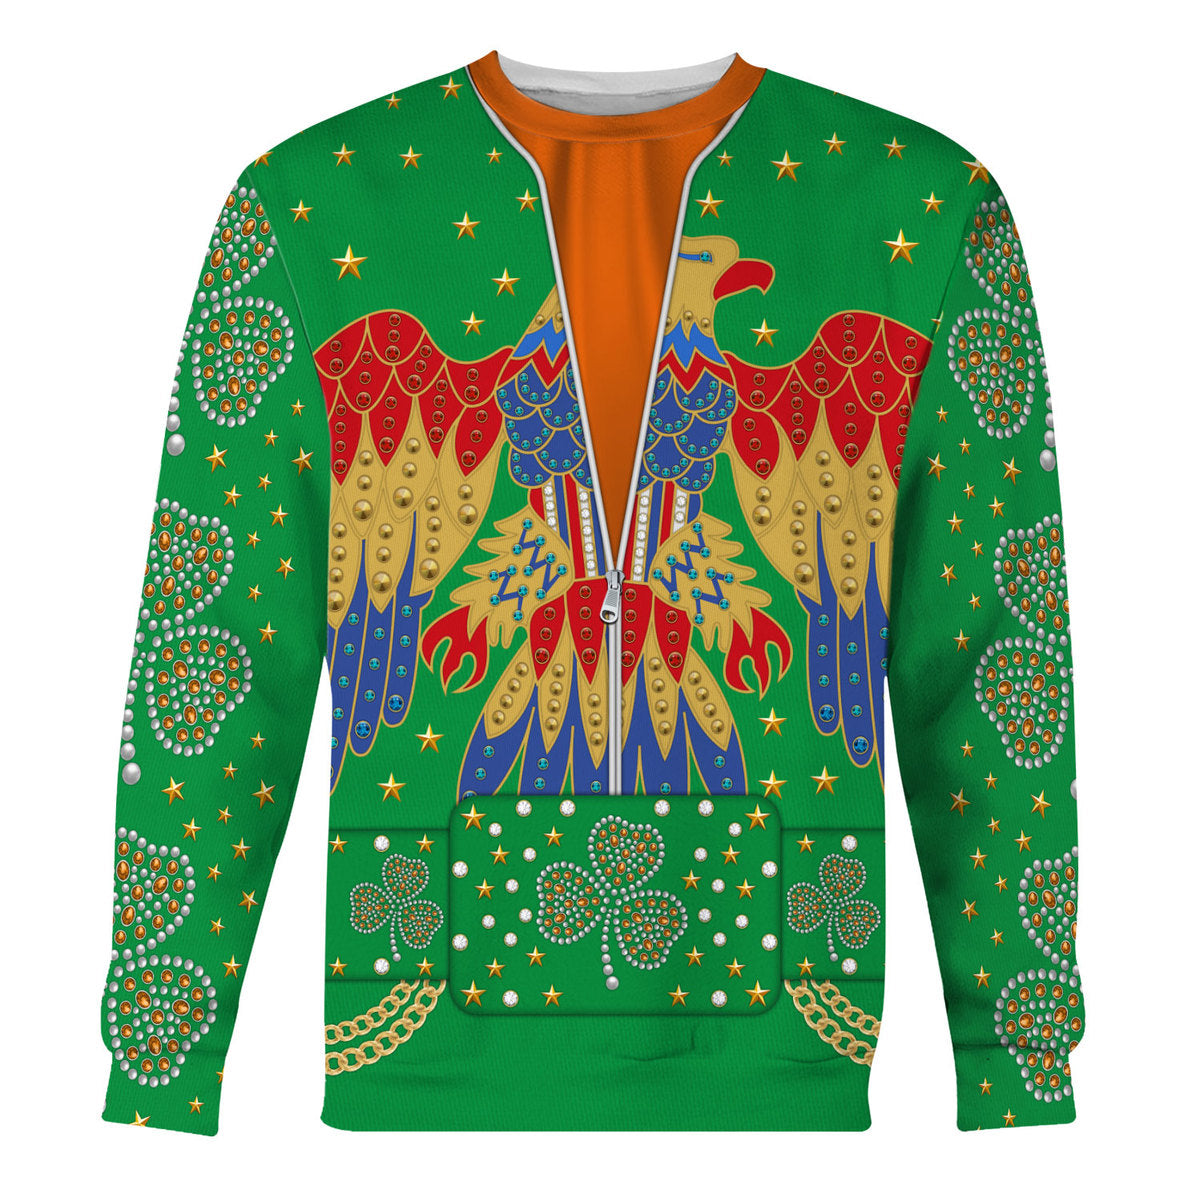 Celebrating the King Elvis Presley EAGLE Costume for St. Patrick's Day Sweatshirt